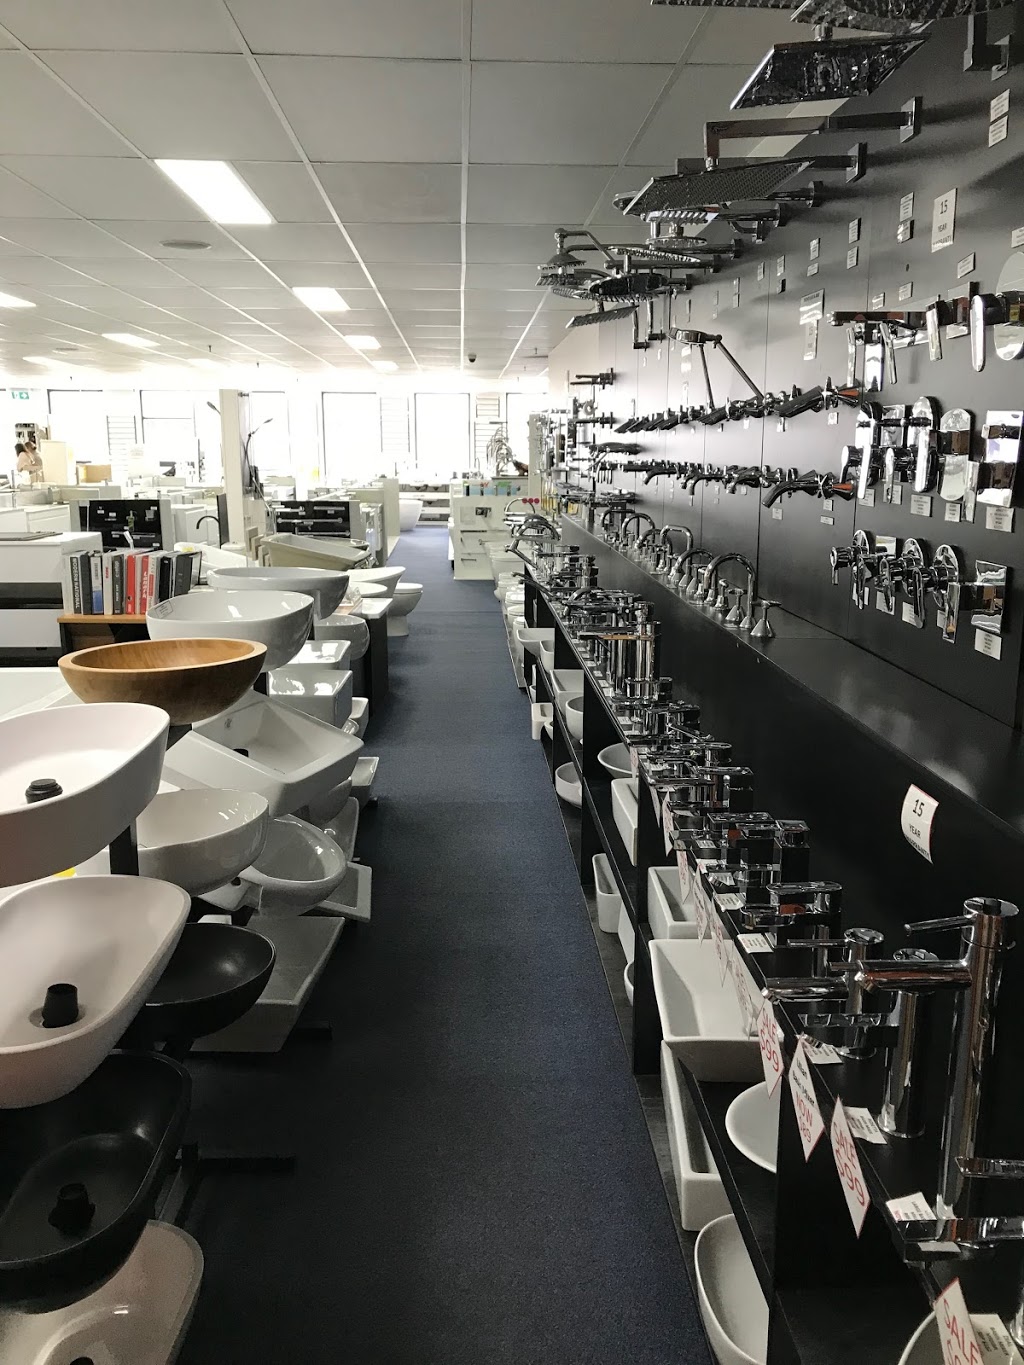 Renovation Kingdom | furniture store | 9 Barney St, North Parramatta NSW 2151, Australia | 1300747656 OR +61 1300 747 656